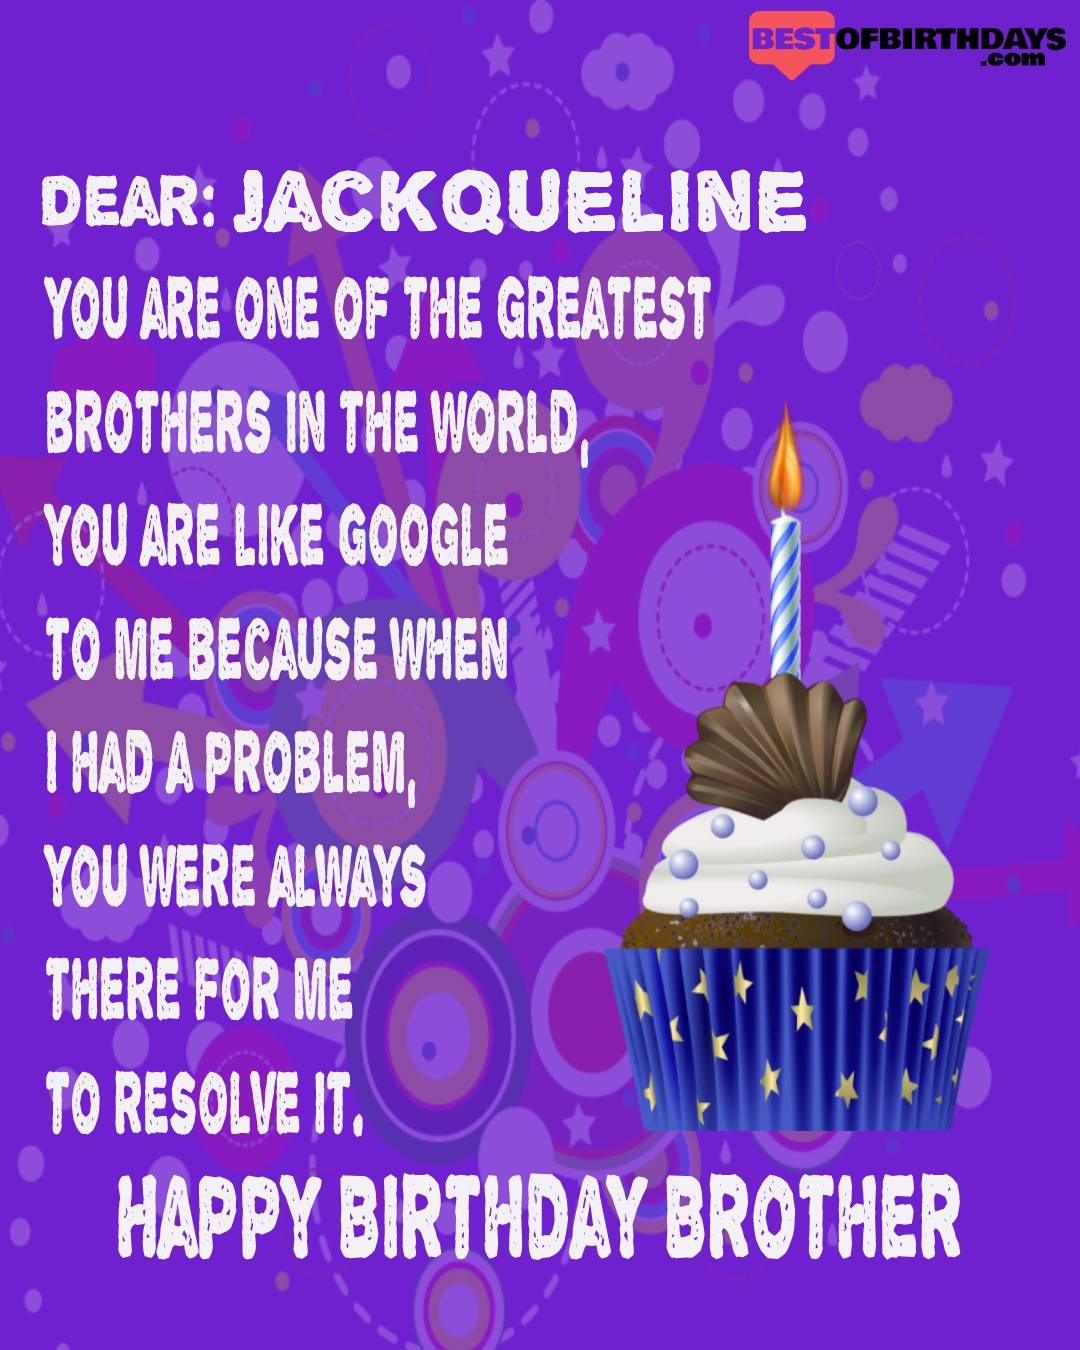 Happy birthday jackqueline bhai brother bro